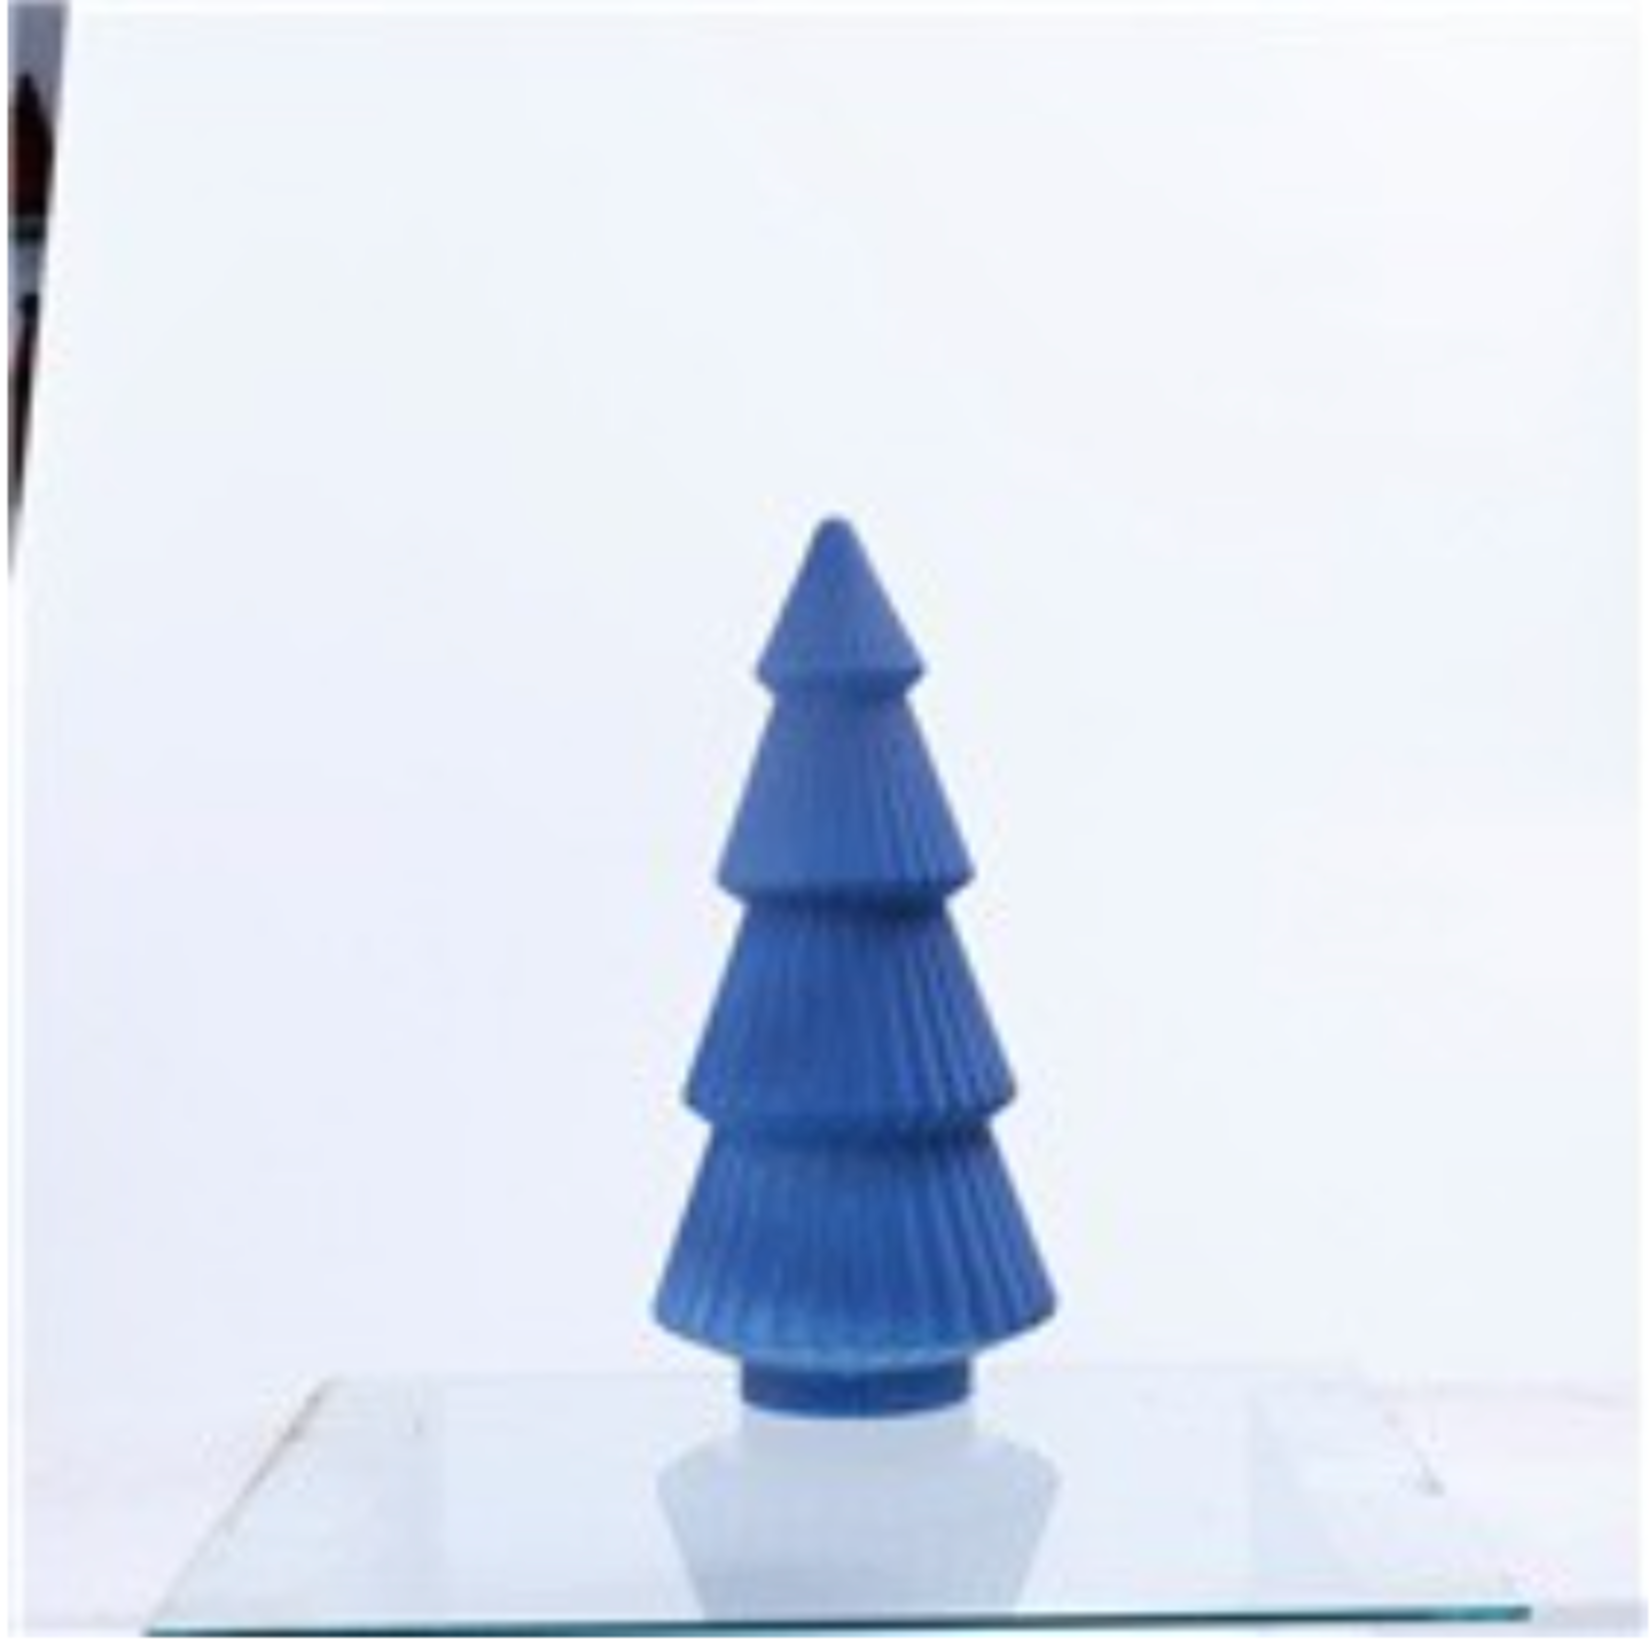 14.6”H X 7.1” BLUE GLASS CHRISTMAS TREE